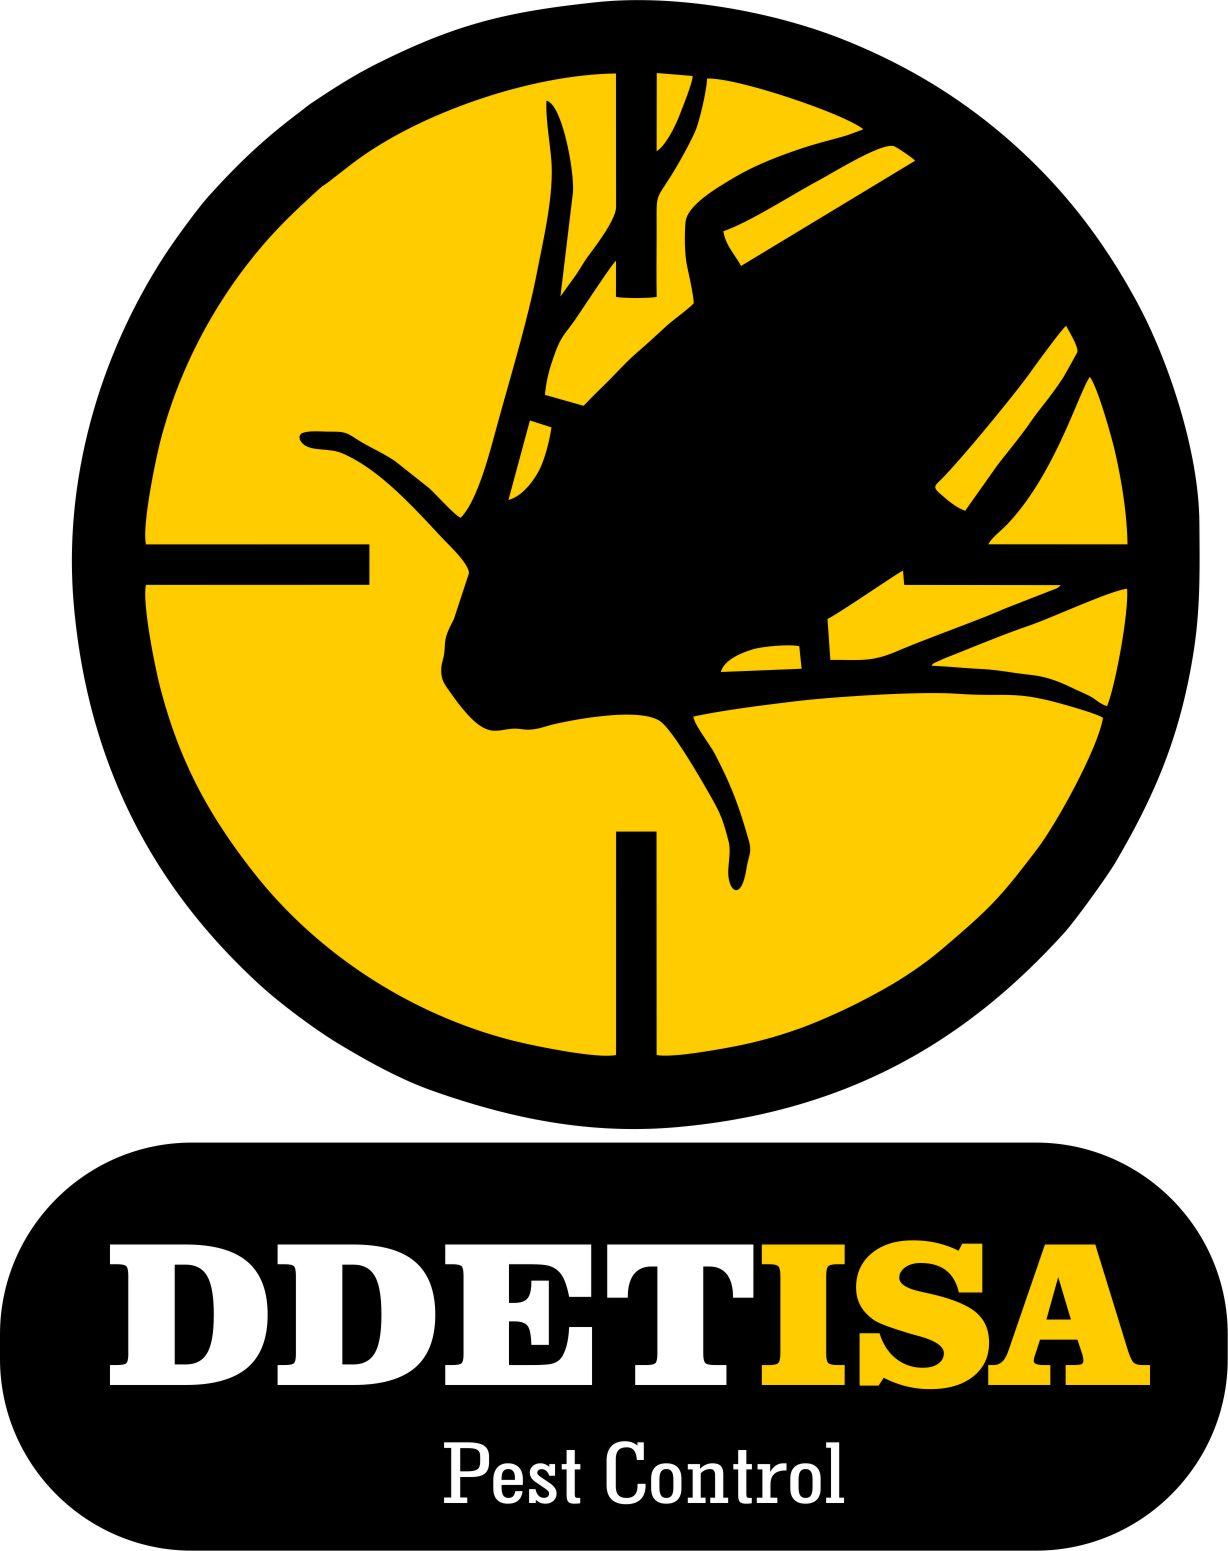 Ddetisa - Pest Control logo